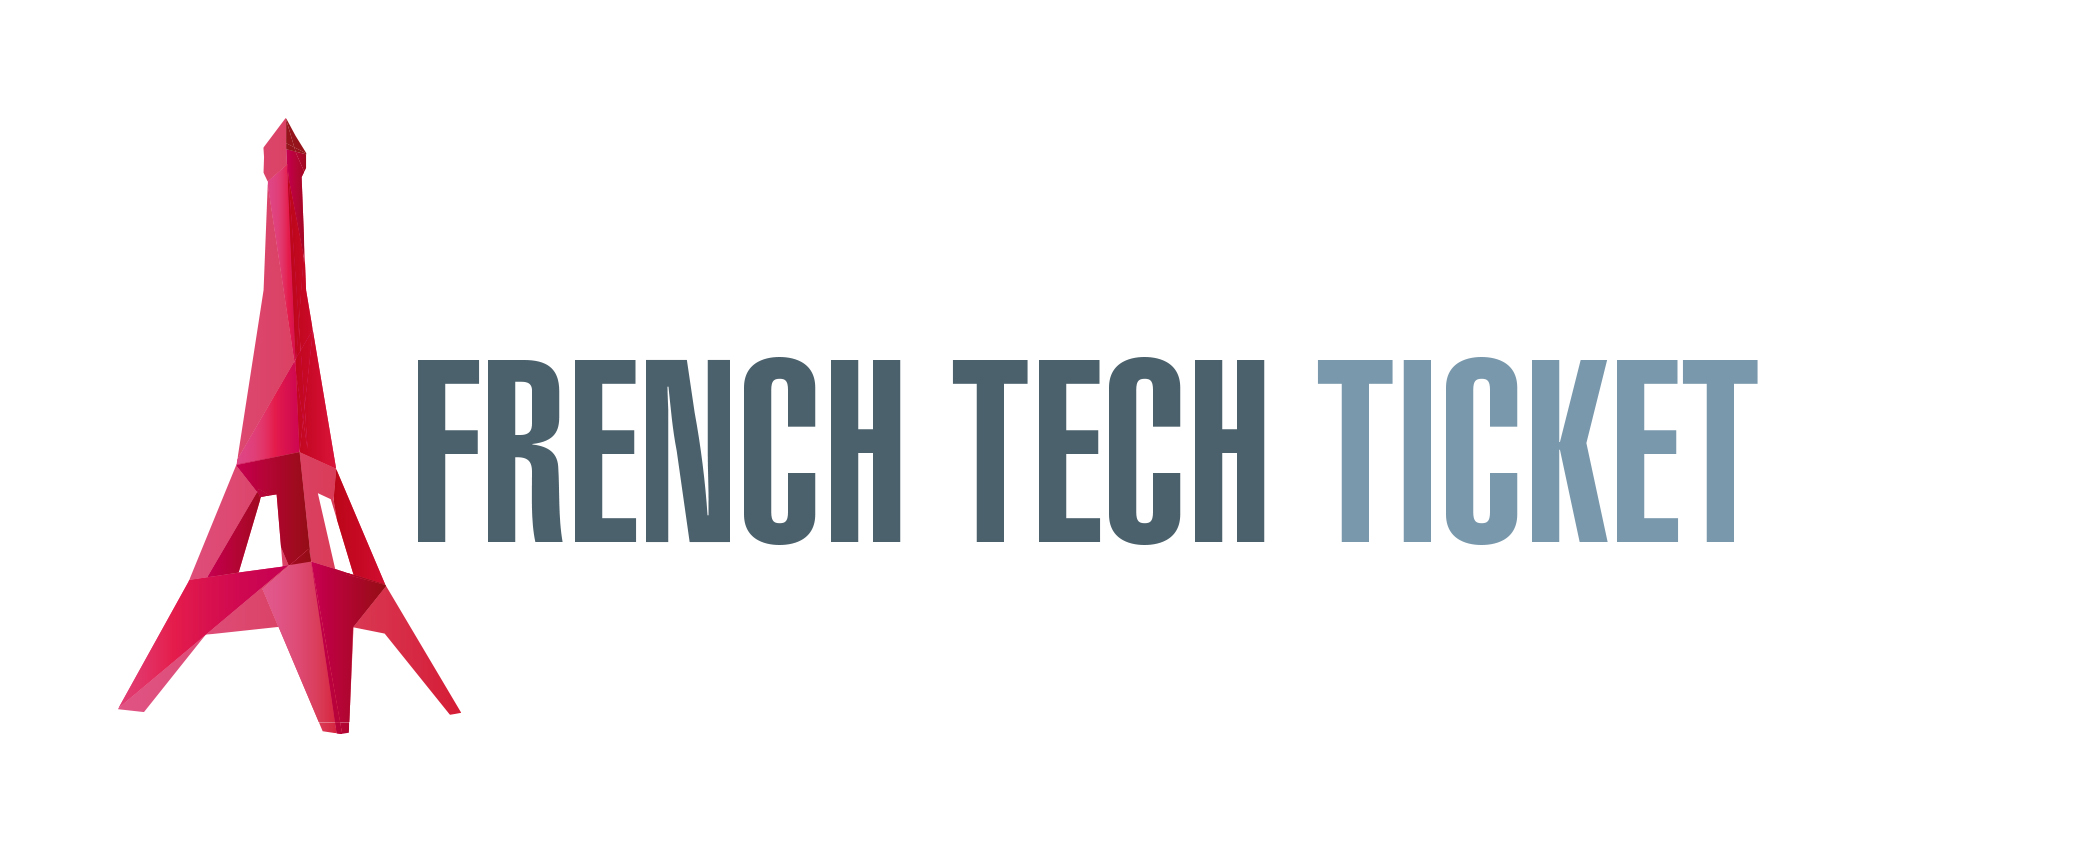 Программа French Tech Ticket: развитие российских стартапов во Франции